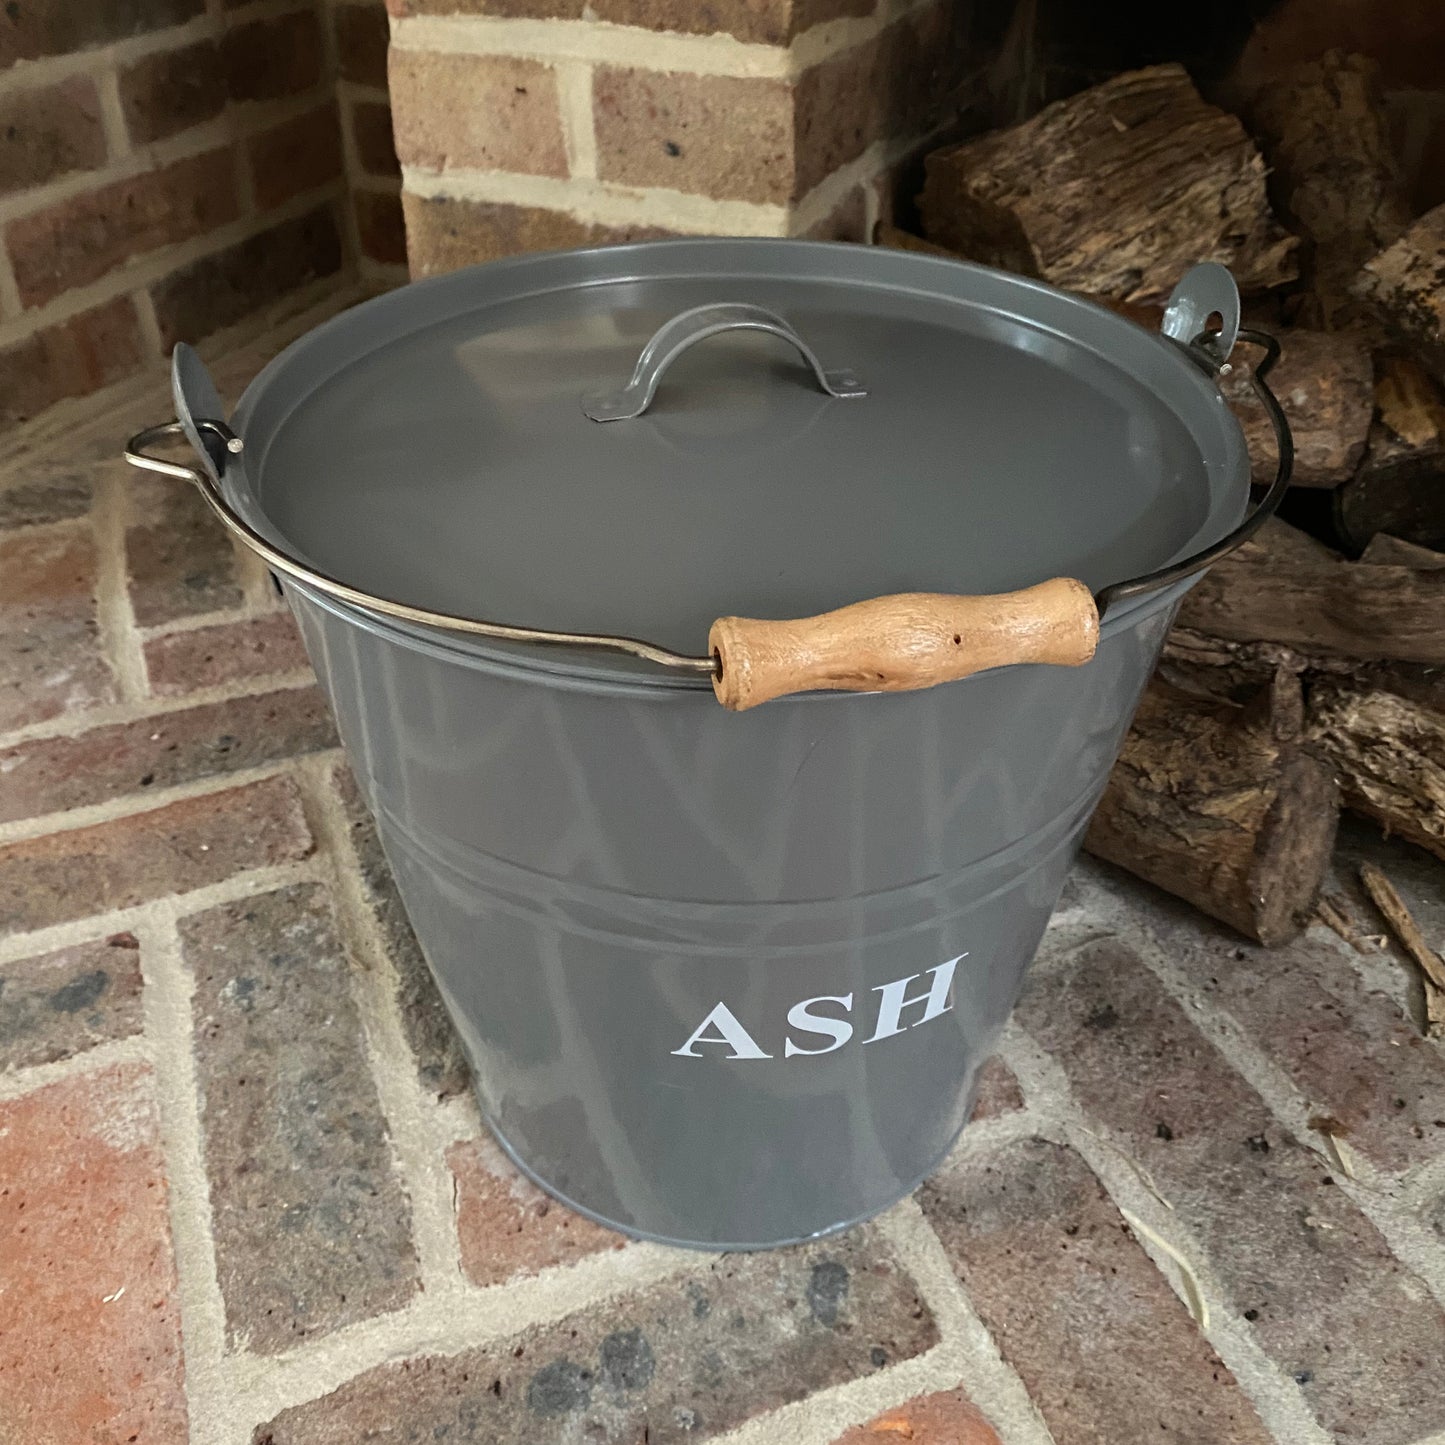 Fireside Ash Bucket & Shovel in French Grey